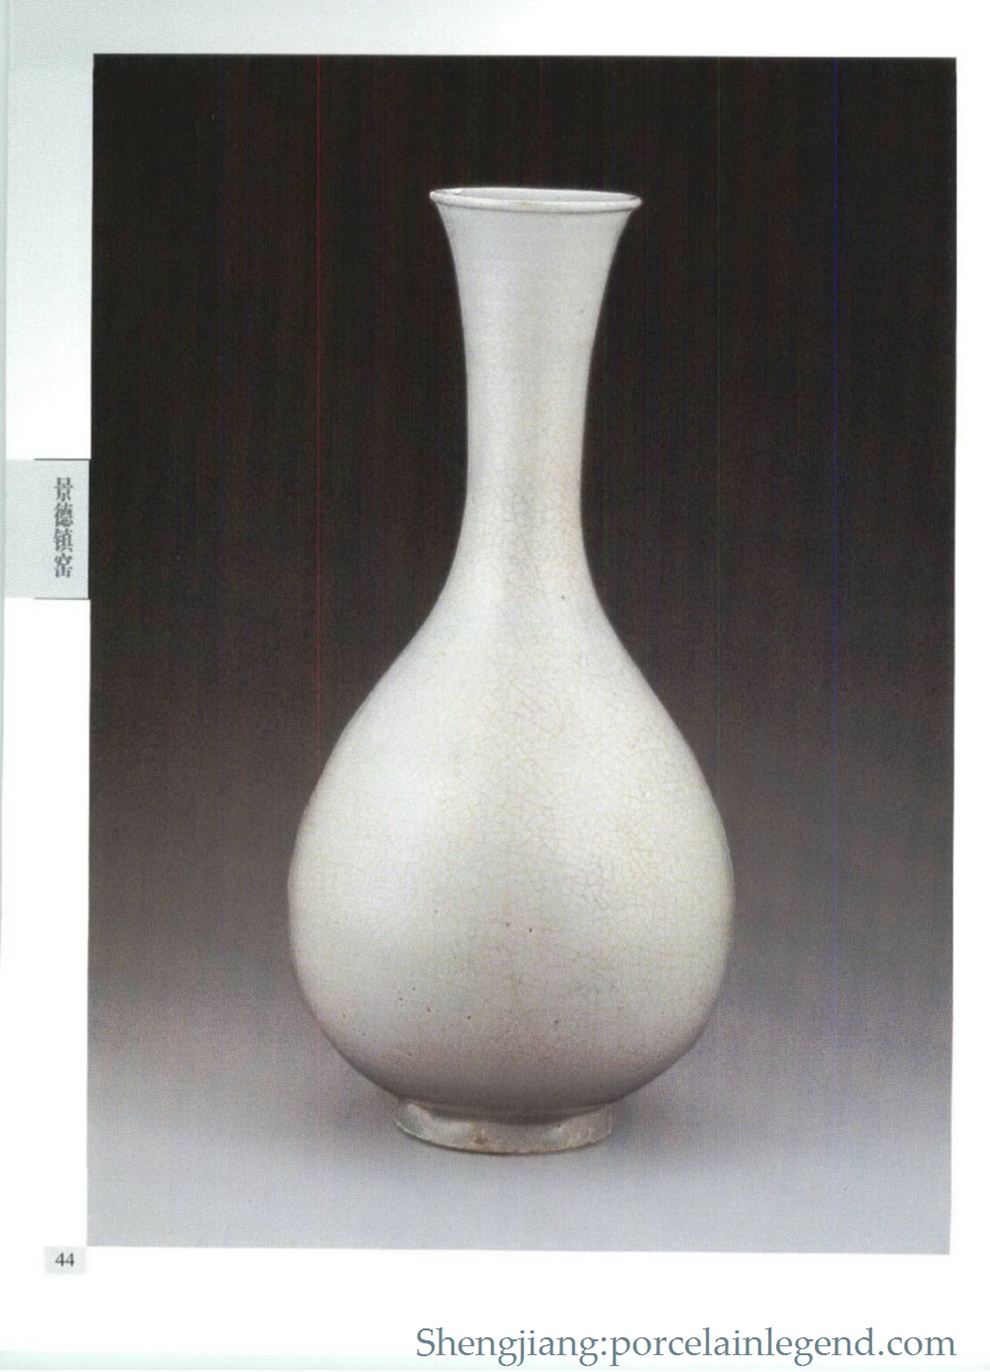 23. Jingdezhen Kiln Green White Glazed Bile Bottle· Yuan (1271-1368) Bluish White Glazed Vase, Jingdezhen Kiln. Yuan Dynasty (1271-1368) is 31 centimeters high, 7 cm in diameter, and 7.3 cm in diameter. It is housed in the Beijing Institute of Cultural Relics.